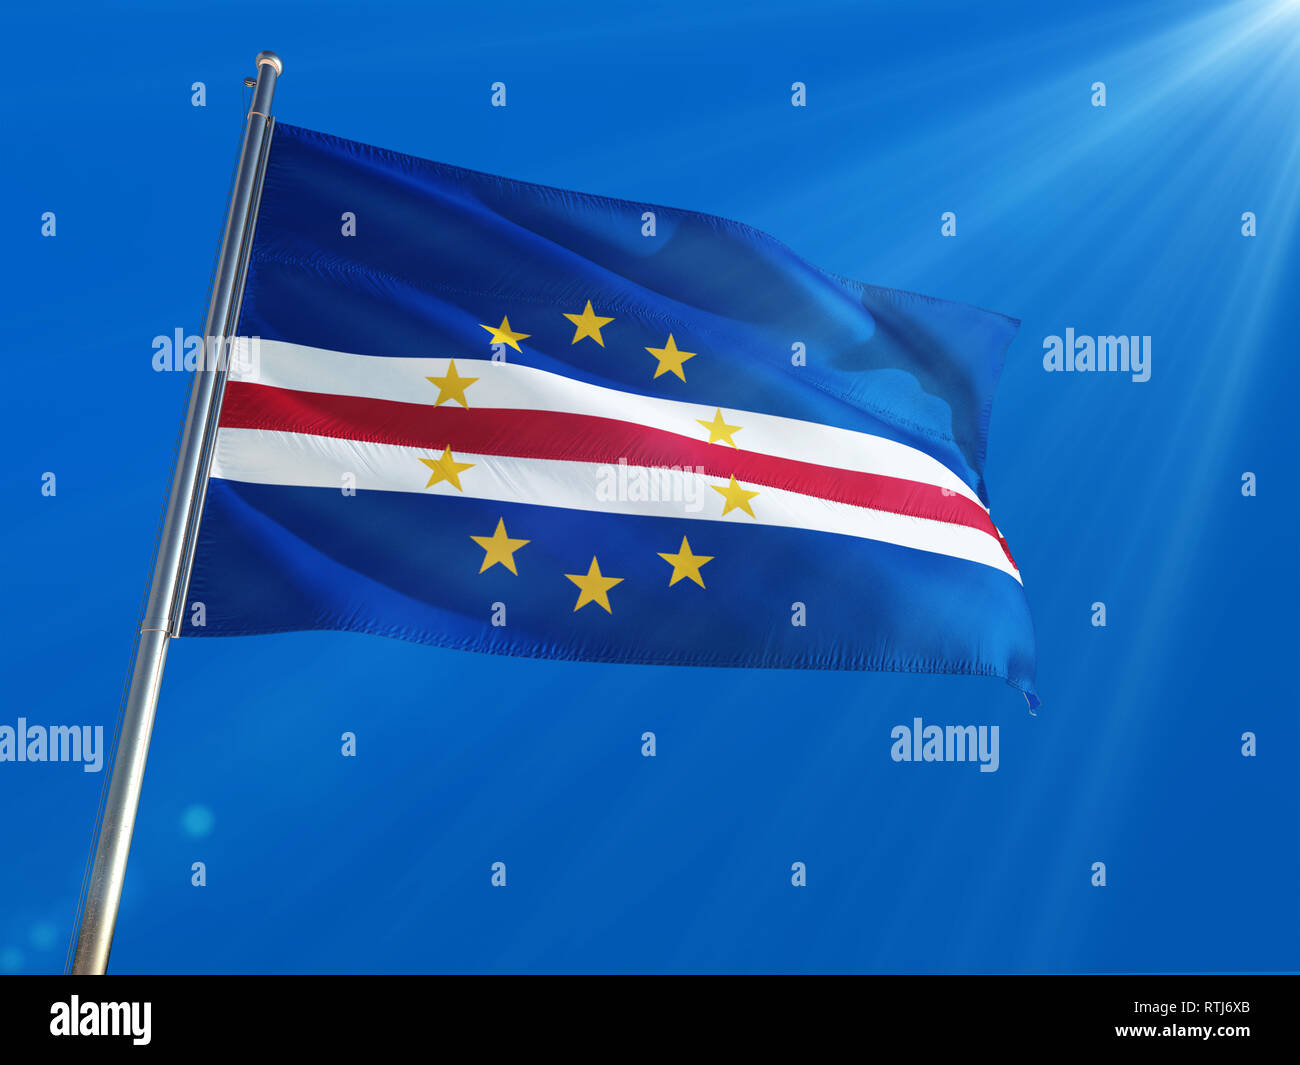 Cape Verde National Flag Waving on pole against deep blue sky background. High Definition Stock Photo